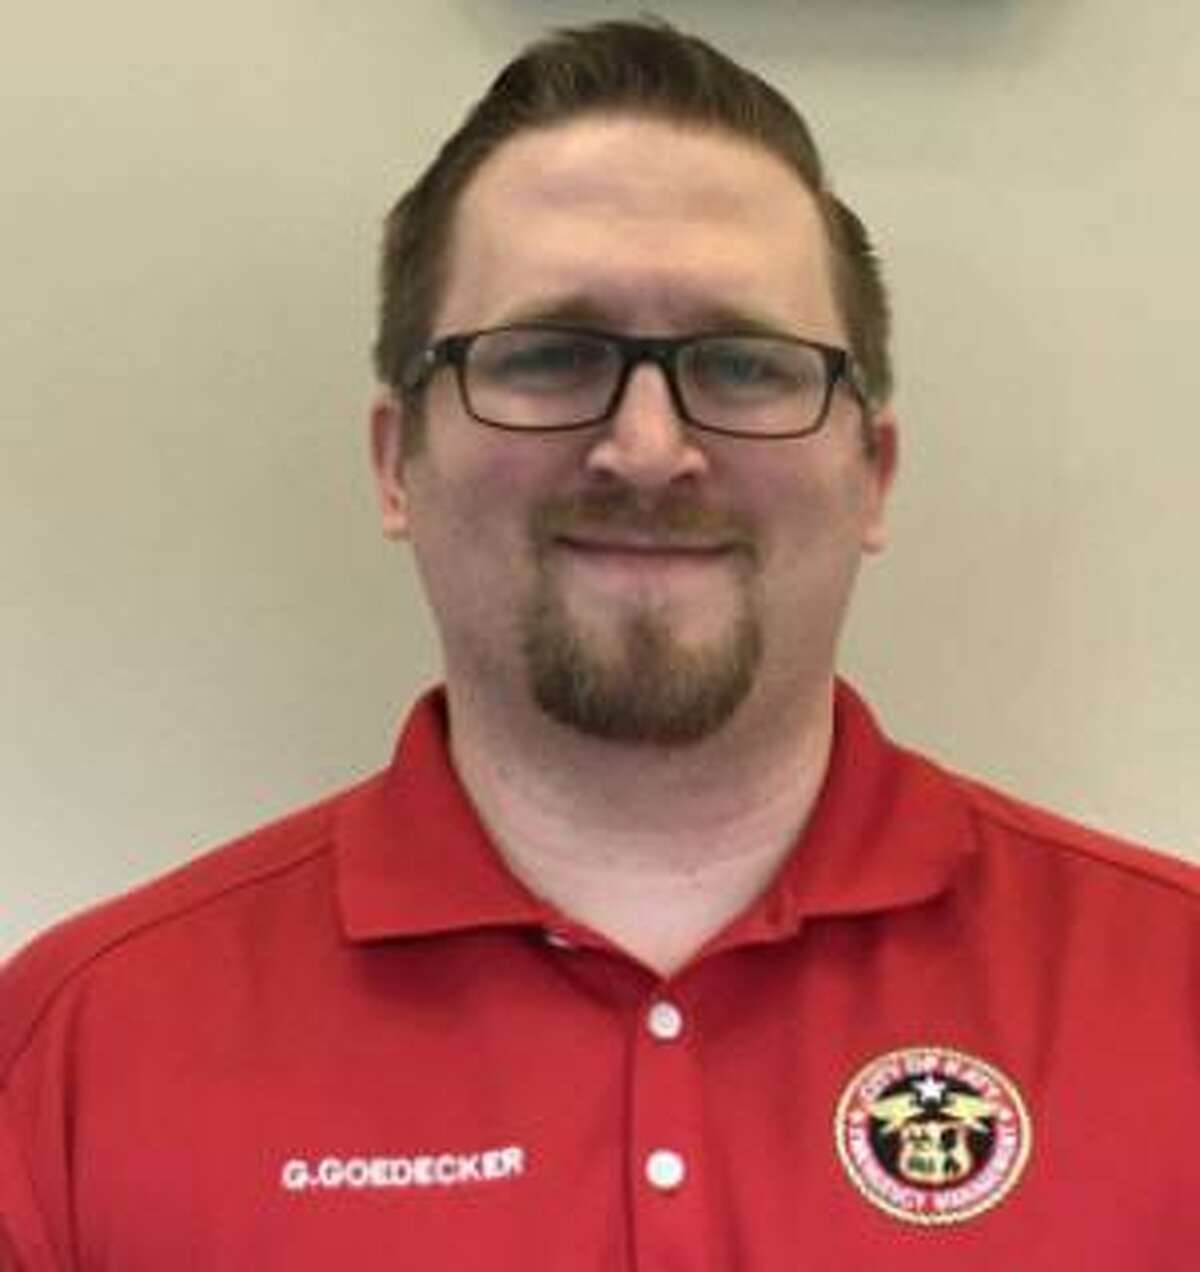 Greg Goedecker is the city of Katy's emergency management coordinator.